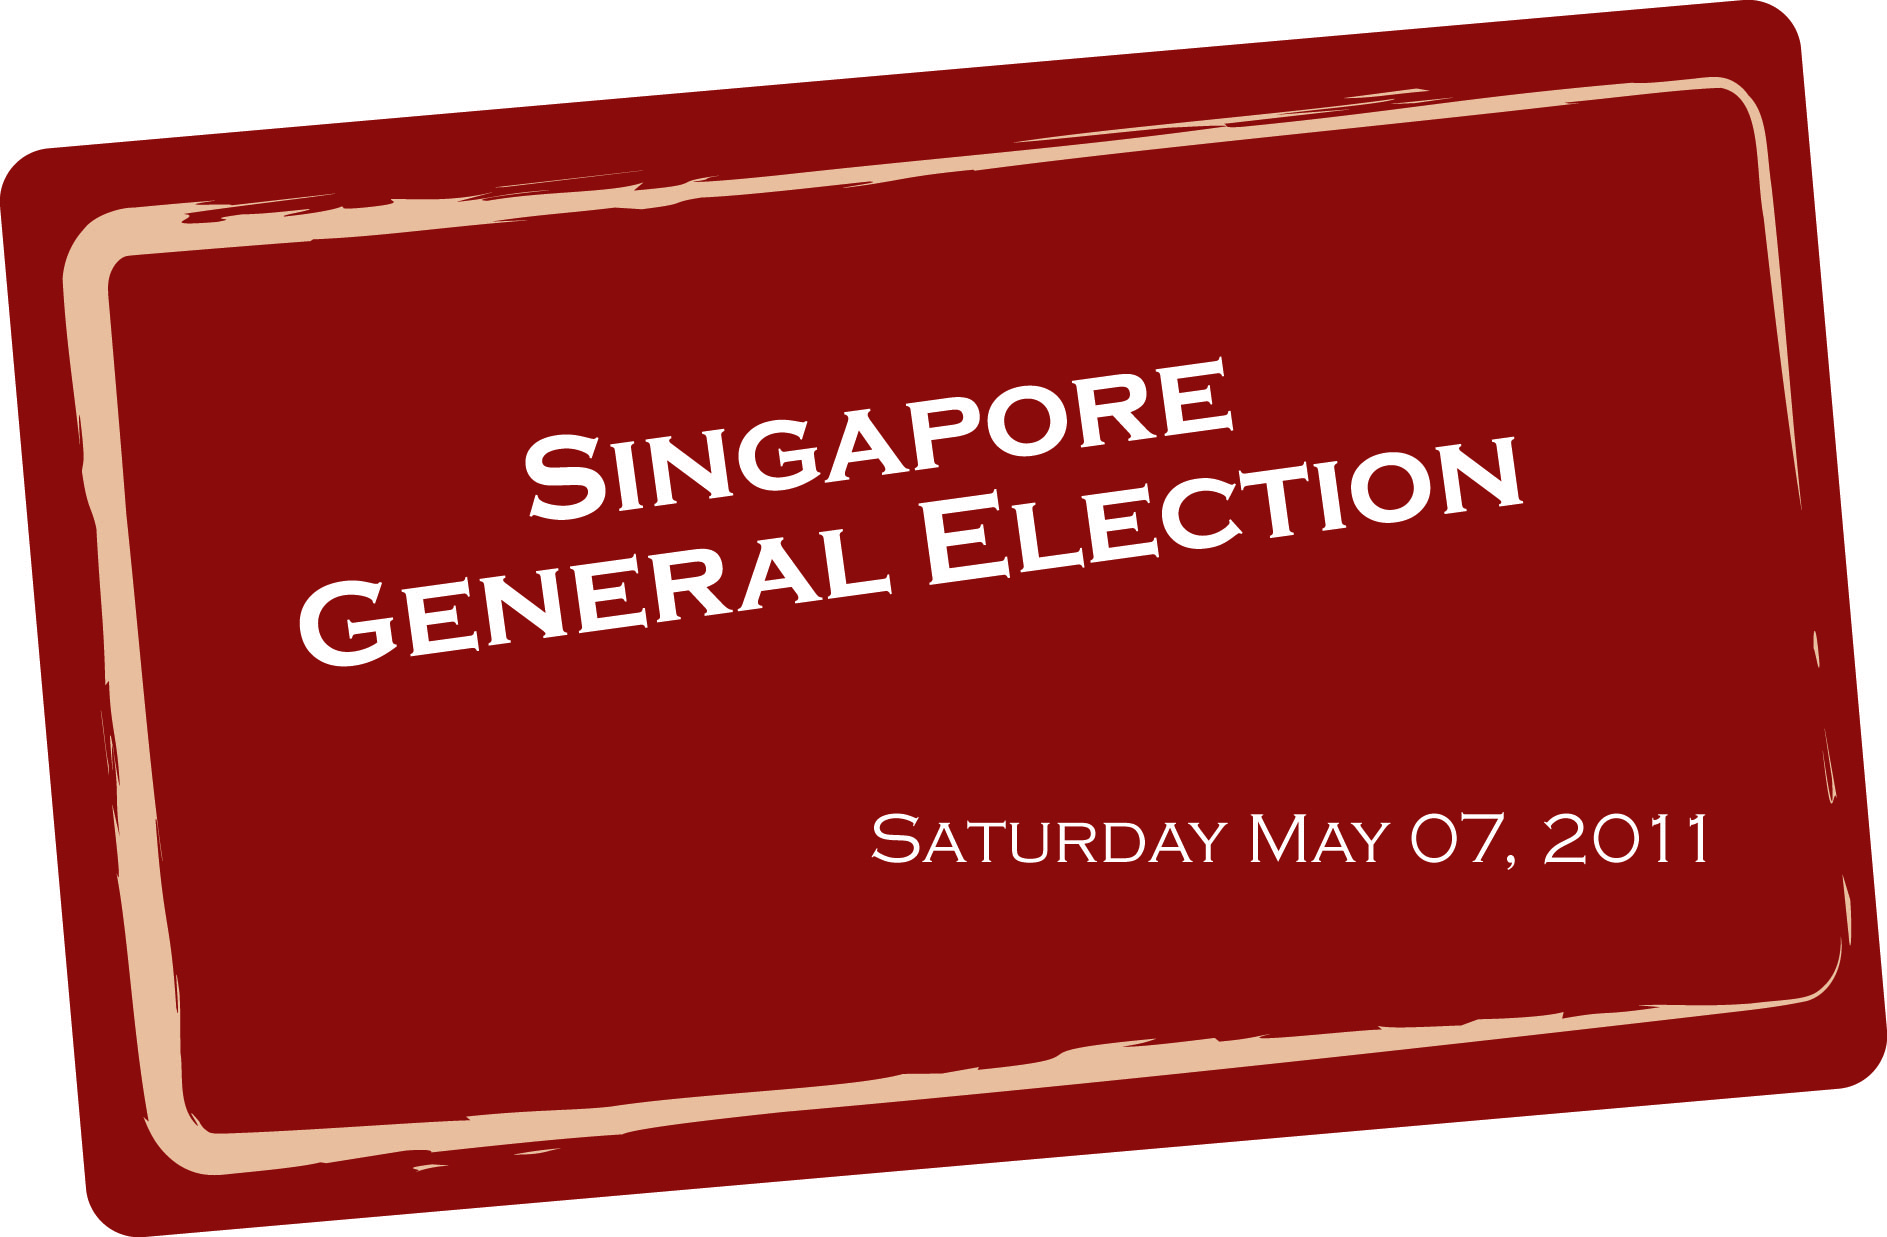 Singapore General Election 2011